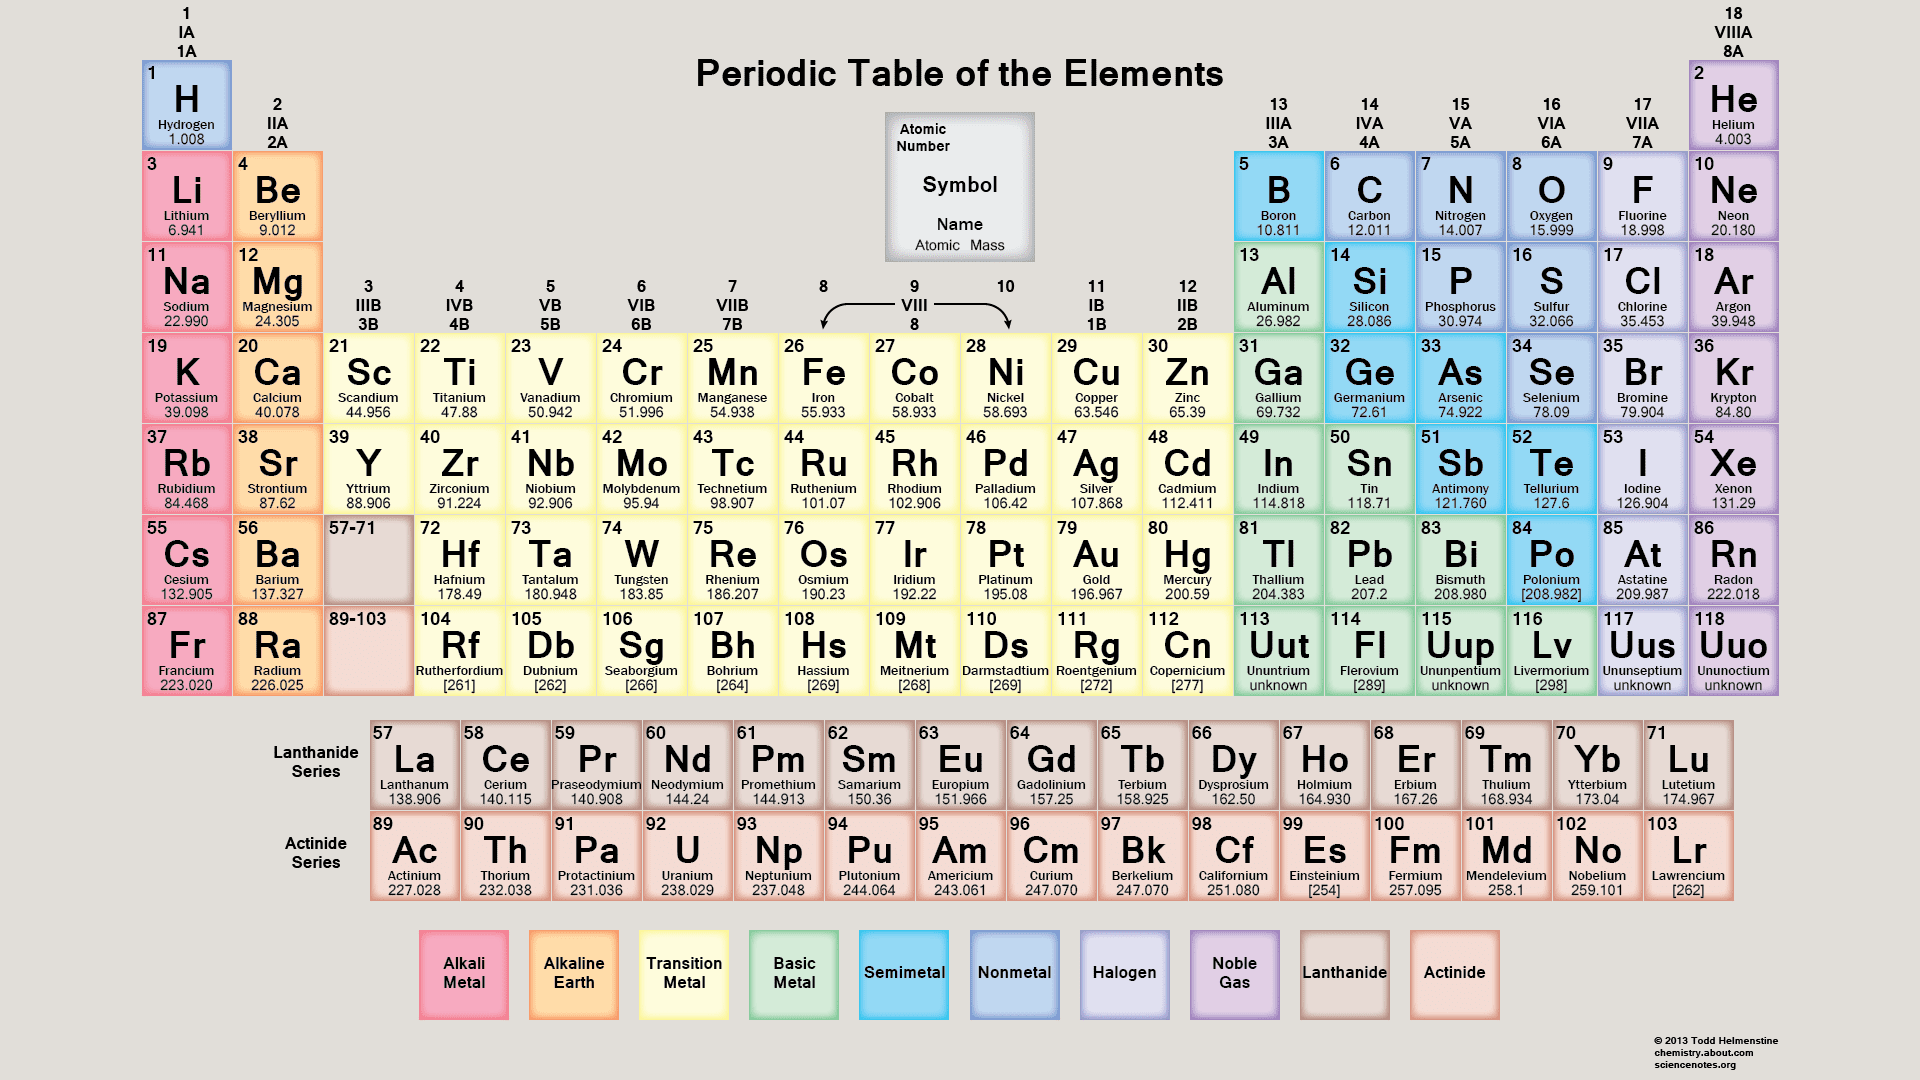 9th element symbol